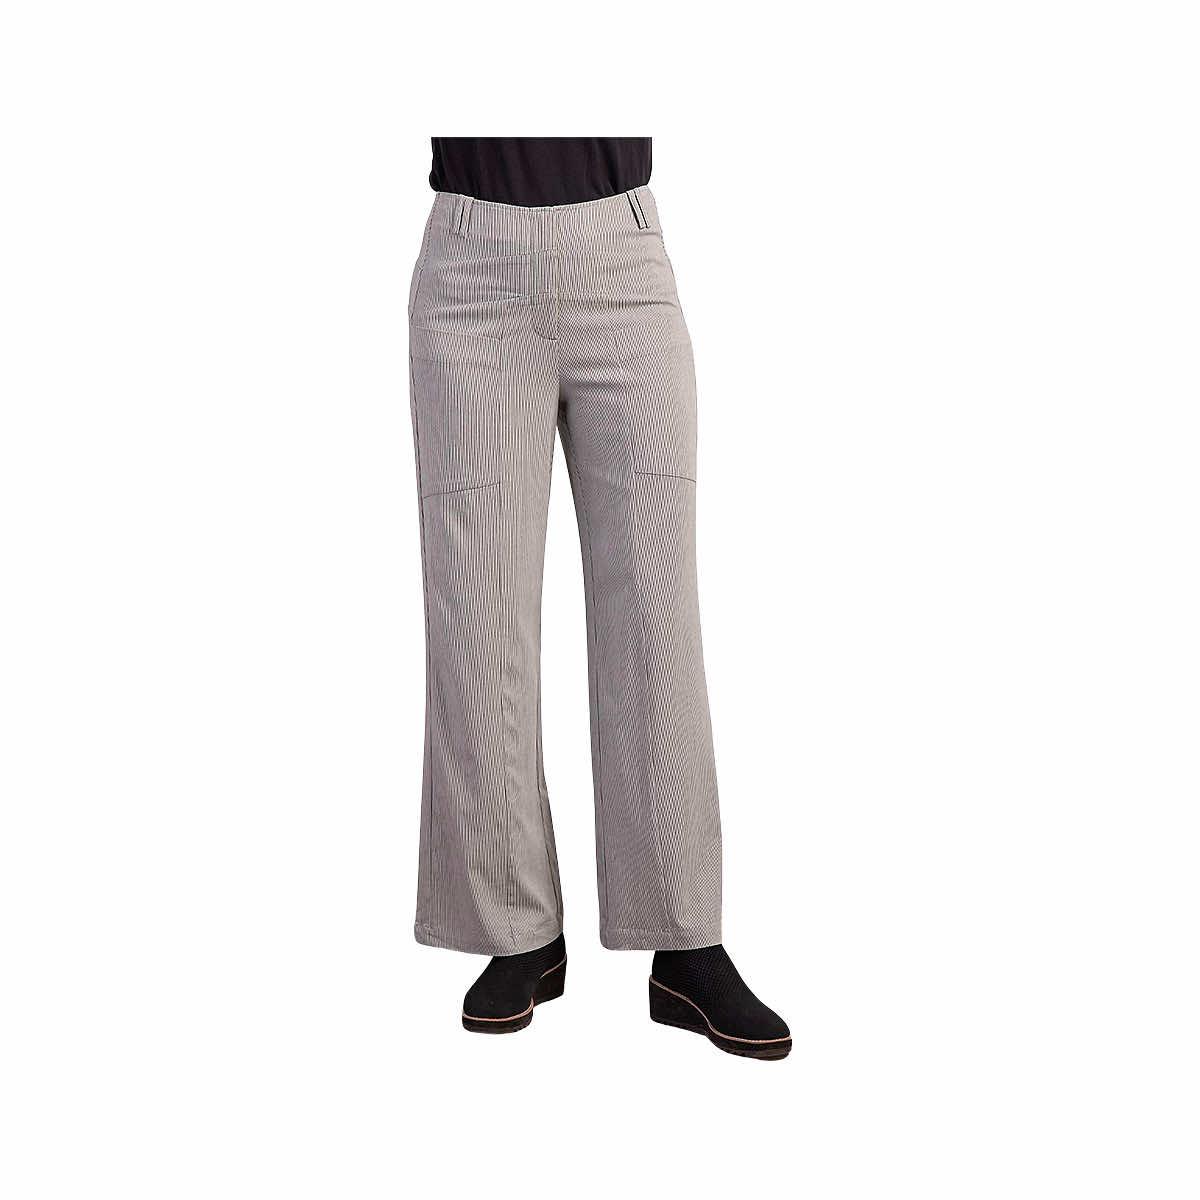 White Pants - Wide-Leg Pants - Side Button Pants - Women's Pants - Lulus